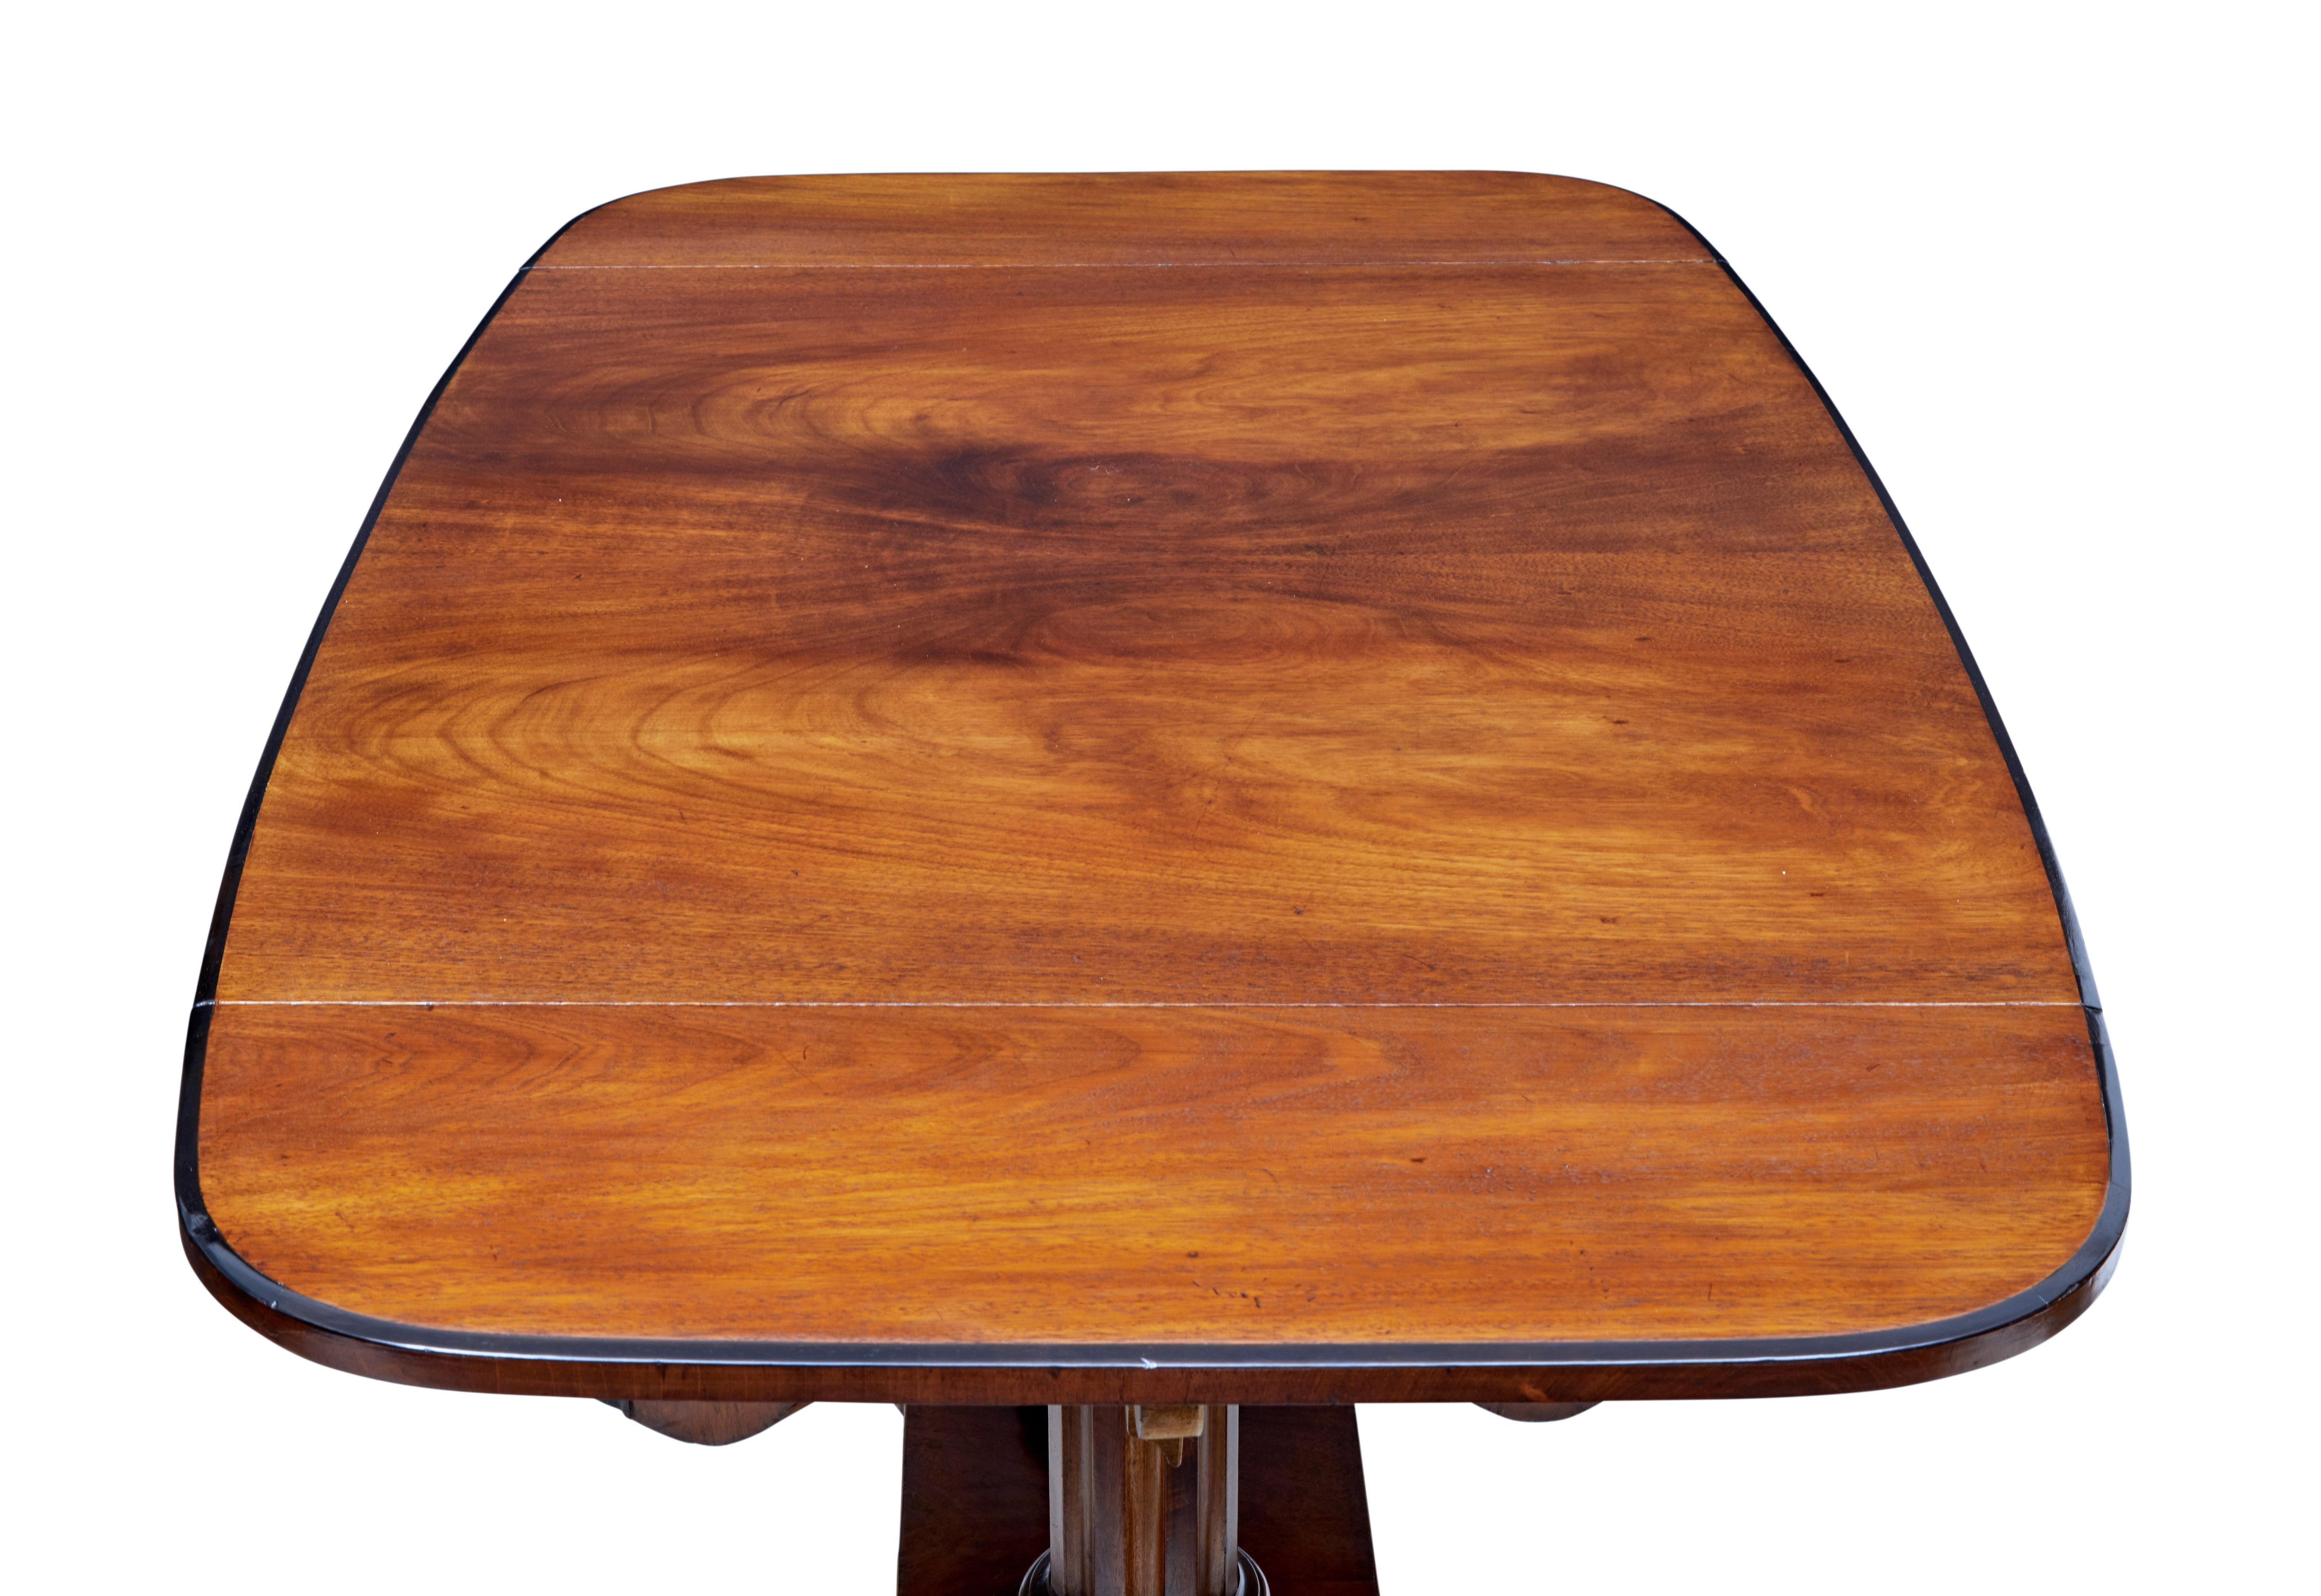 19th Century Mahogany Inlaid Sofa Table (19. Jahrhundert)